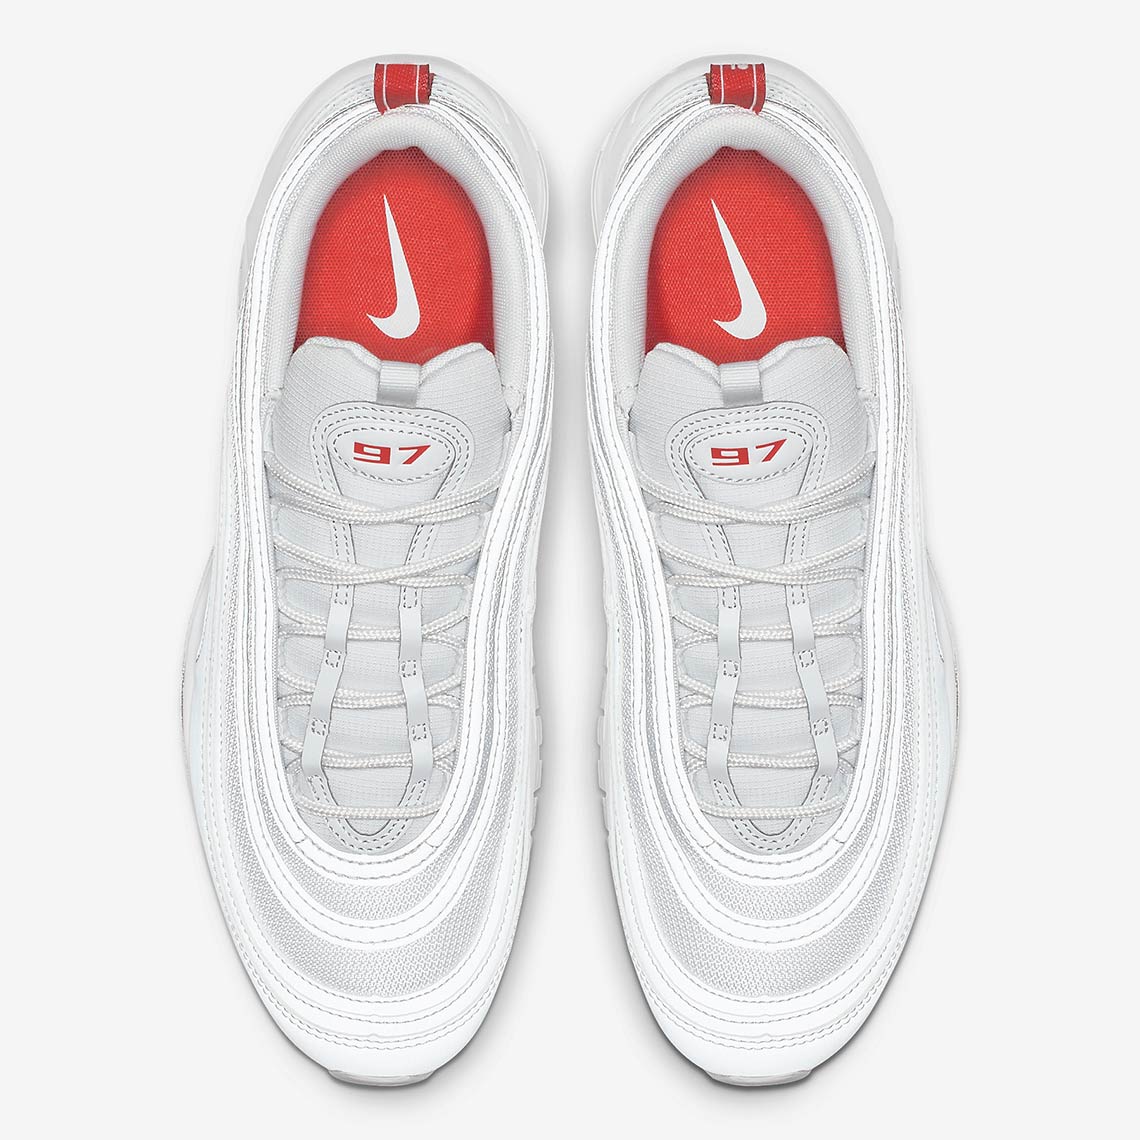 Nike Air Max 97 White Red Bv1985 002 4